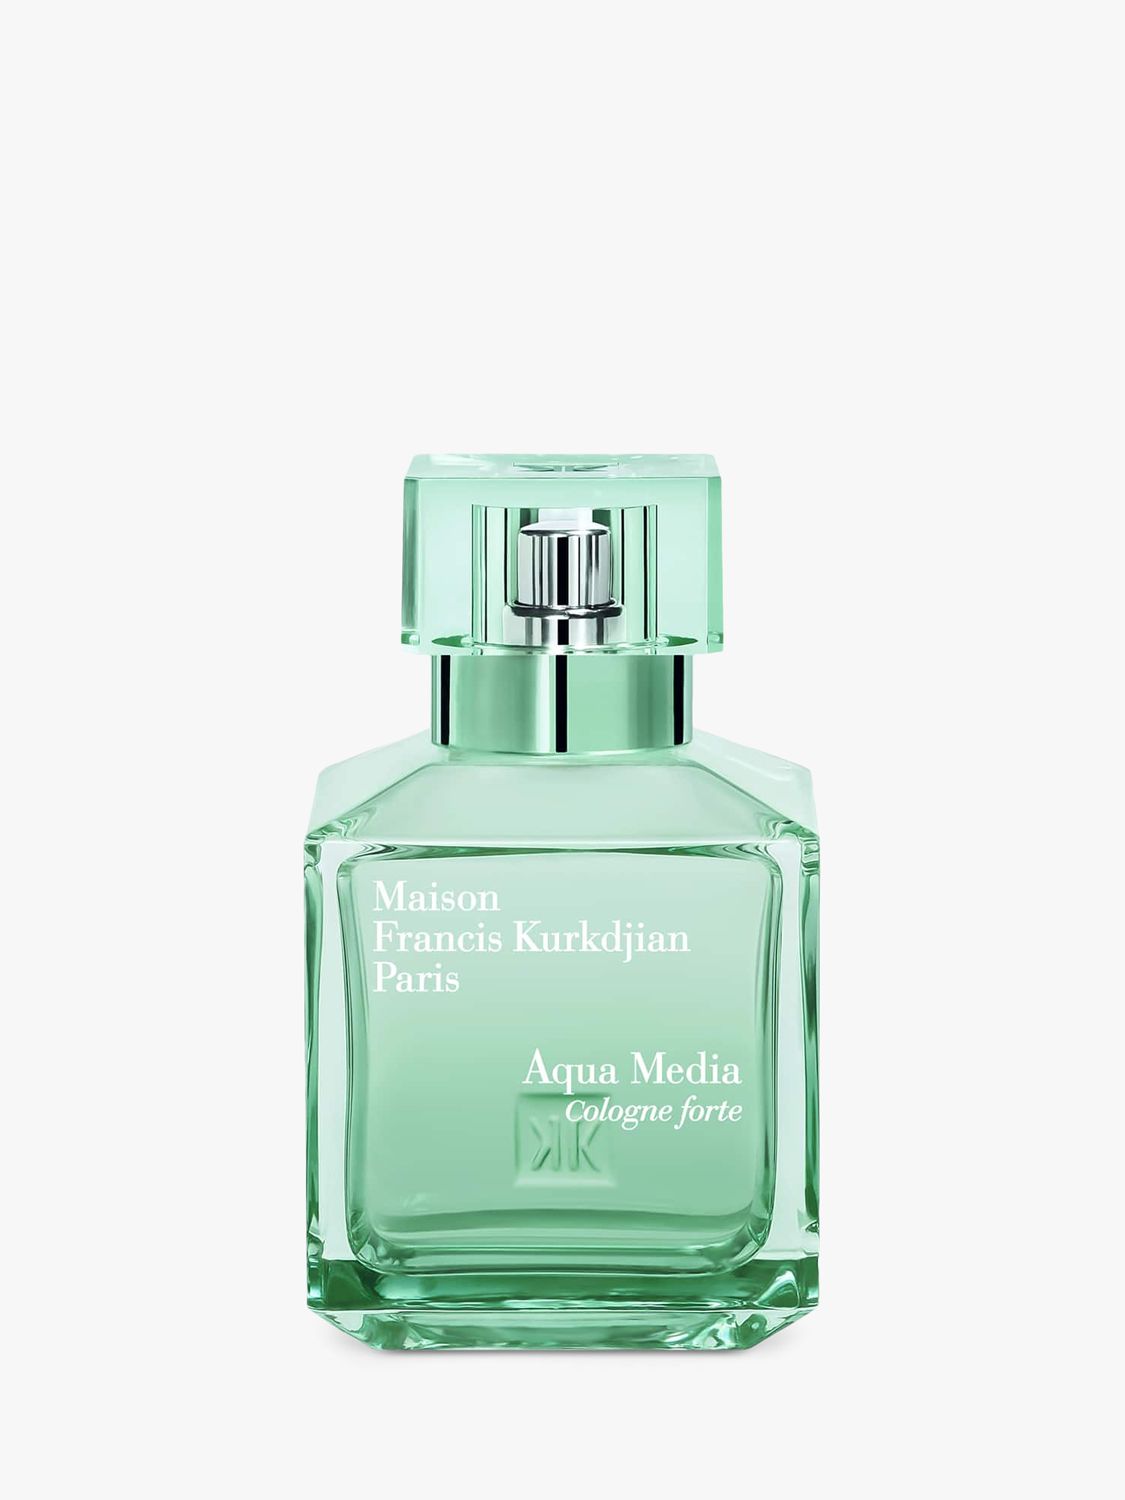 Maison Francis Kurkdjian Aqua Media Cologne Forte Eau de Parfum, 70ml 3